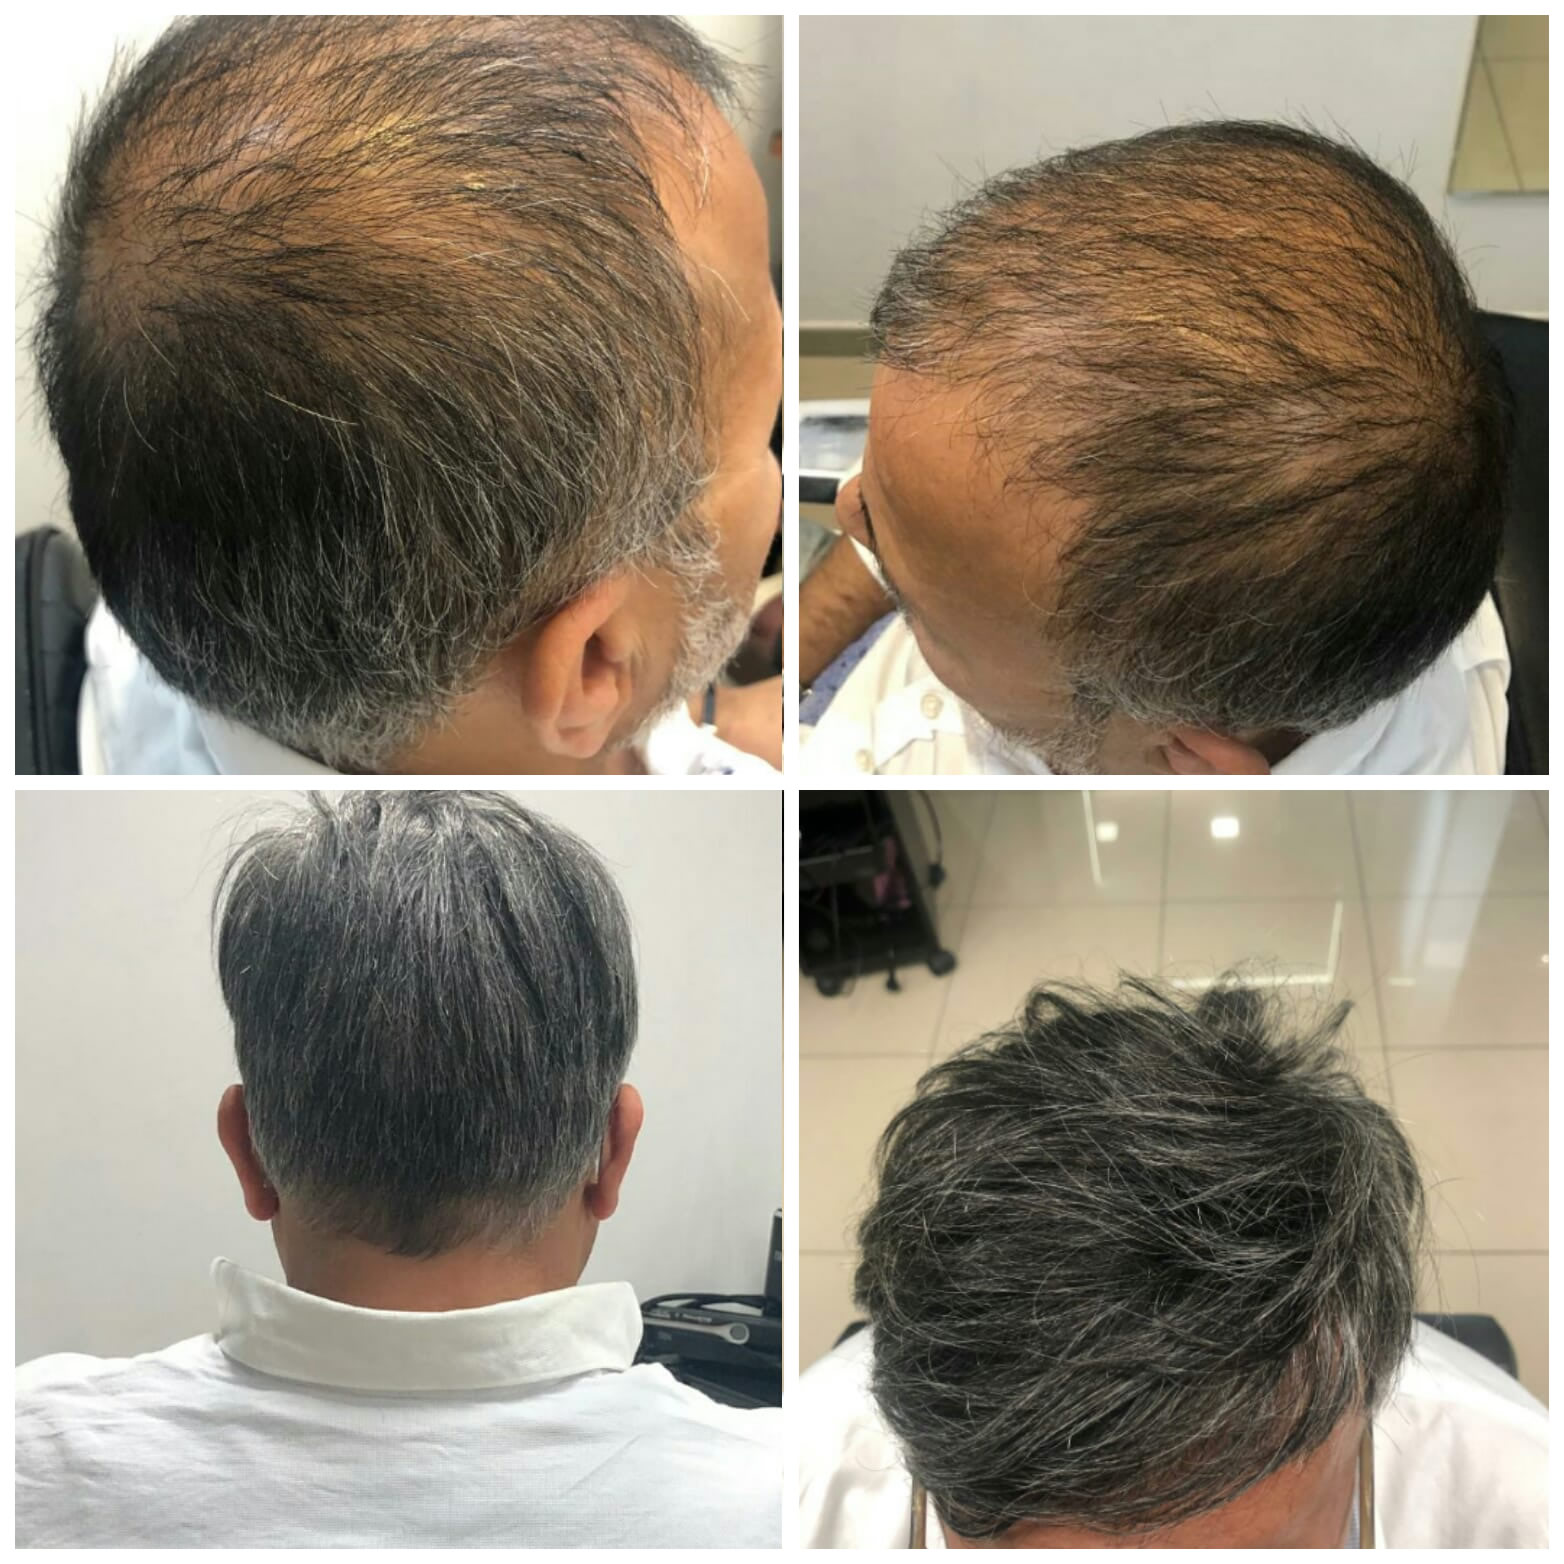 extension alopecia androgenetica